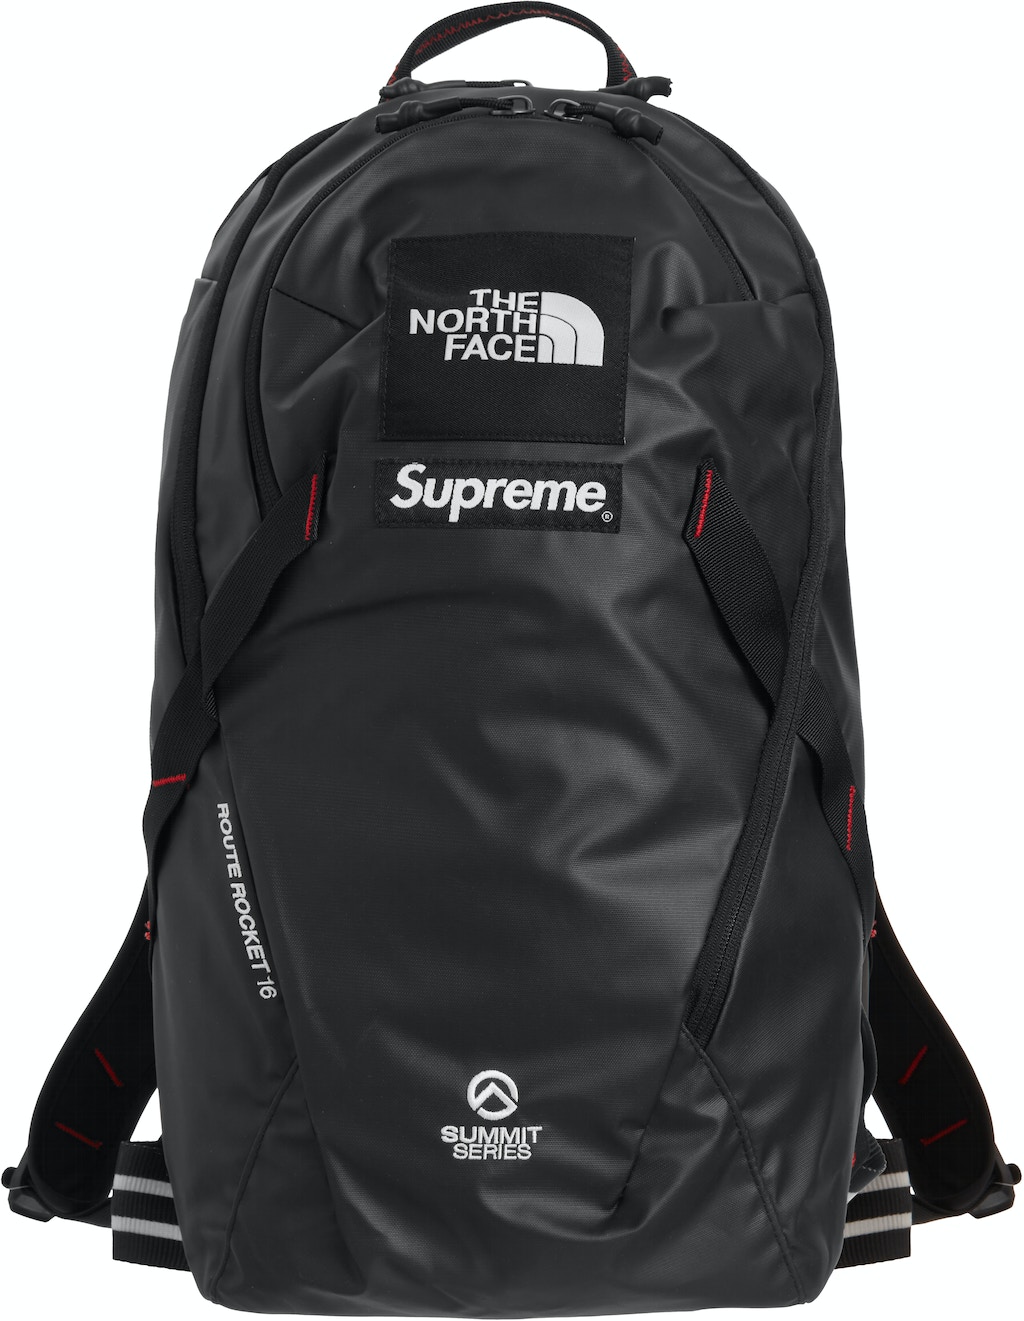 Supreme North Face backpack